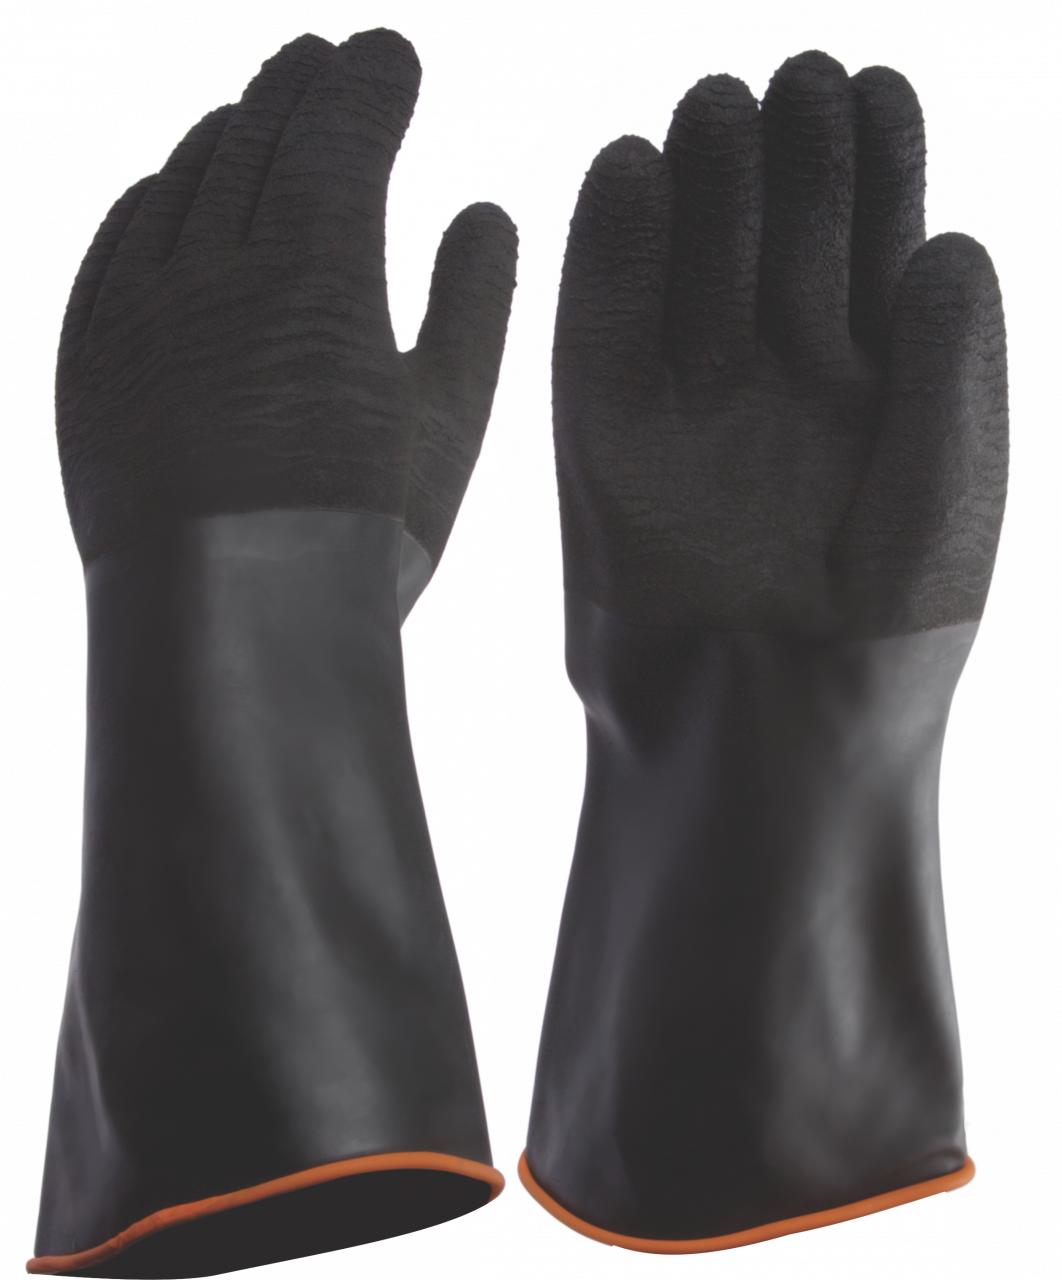 Rubber Glove Rough Black/Orange 16 inch